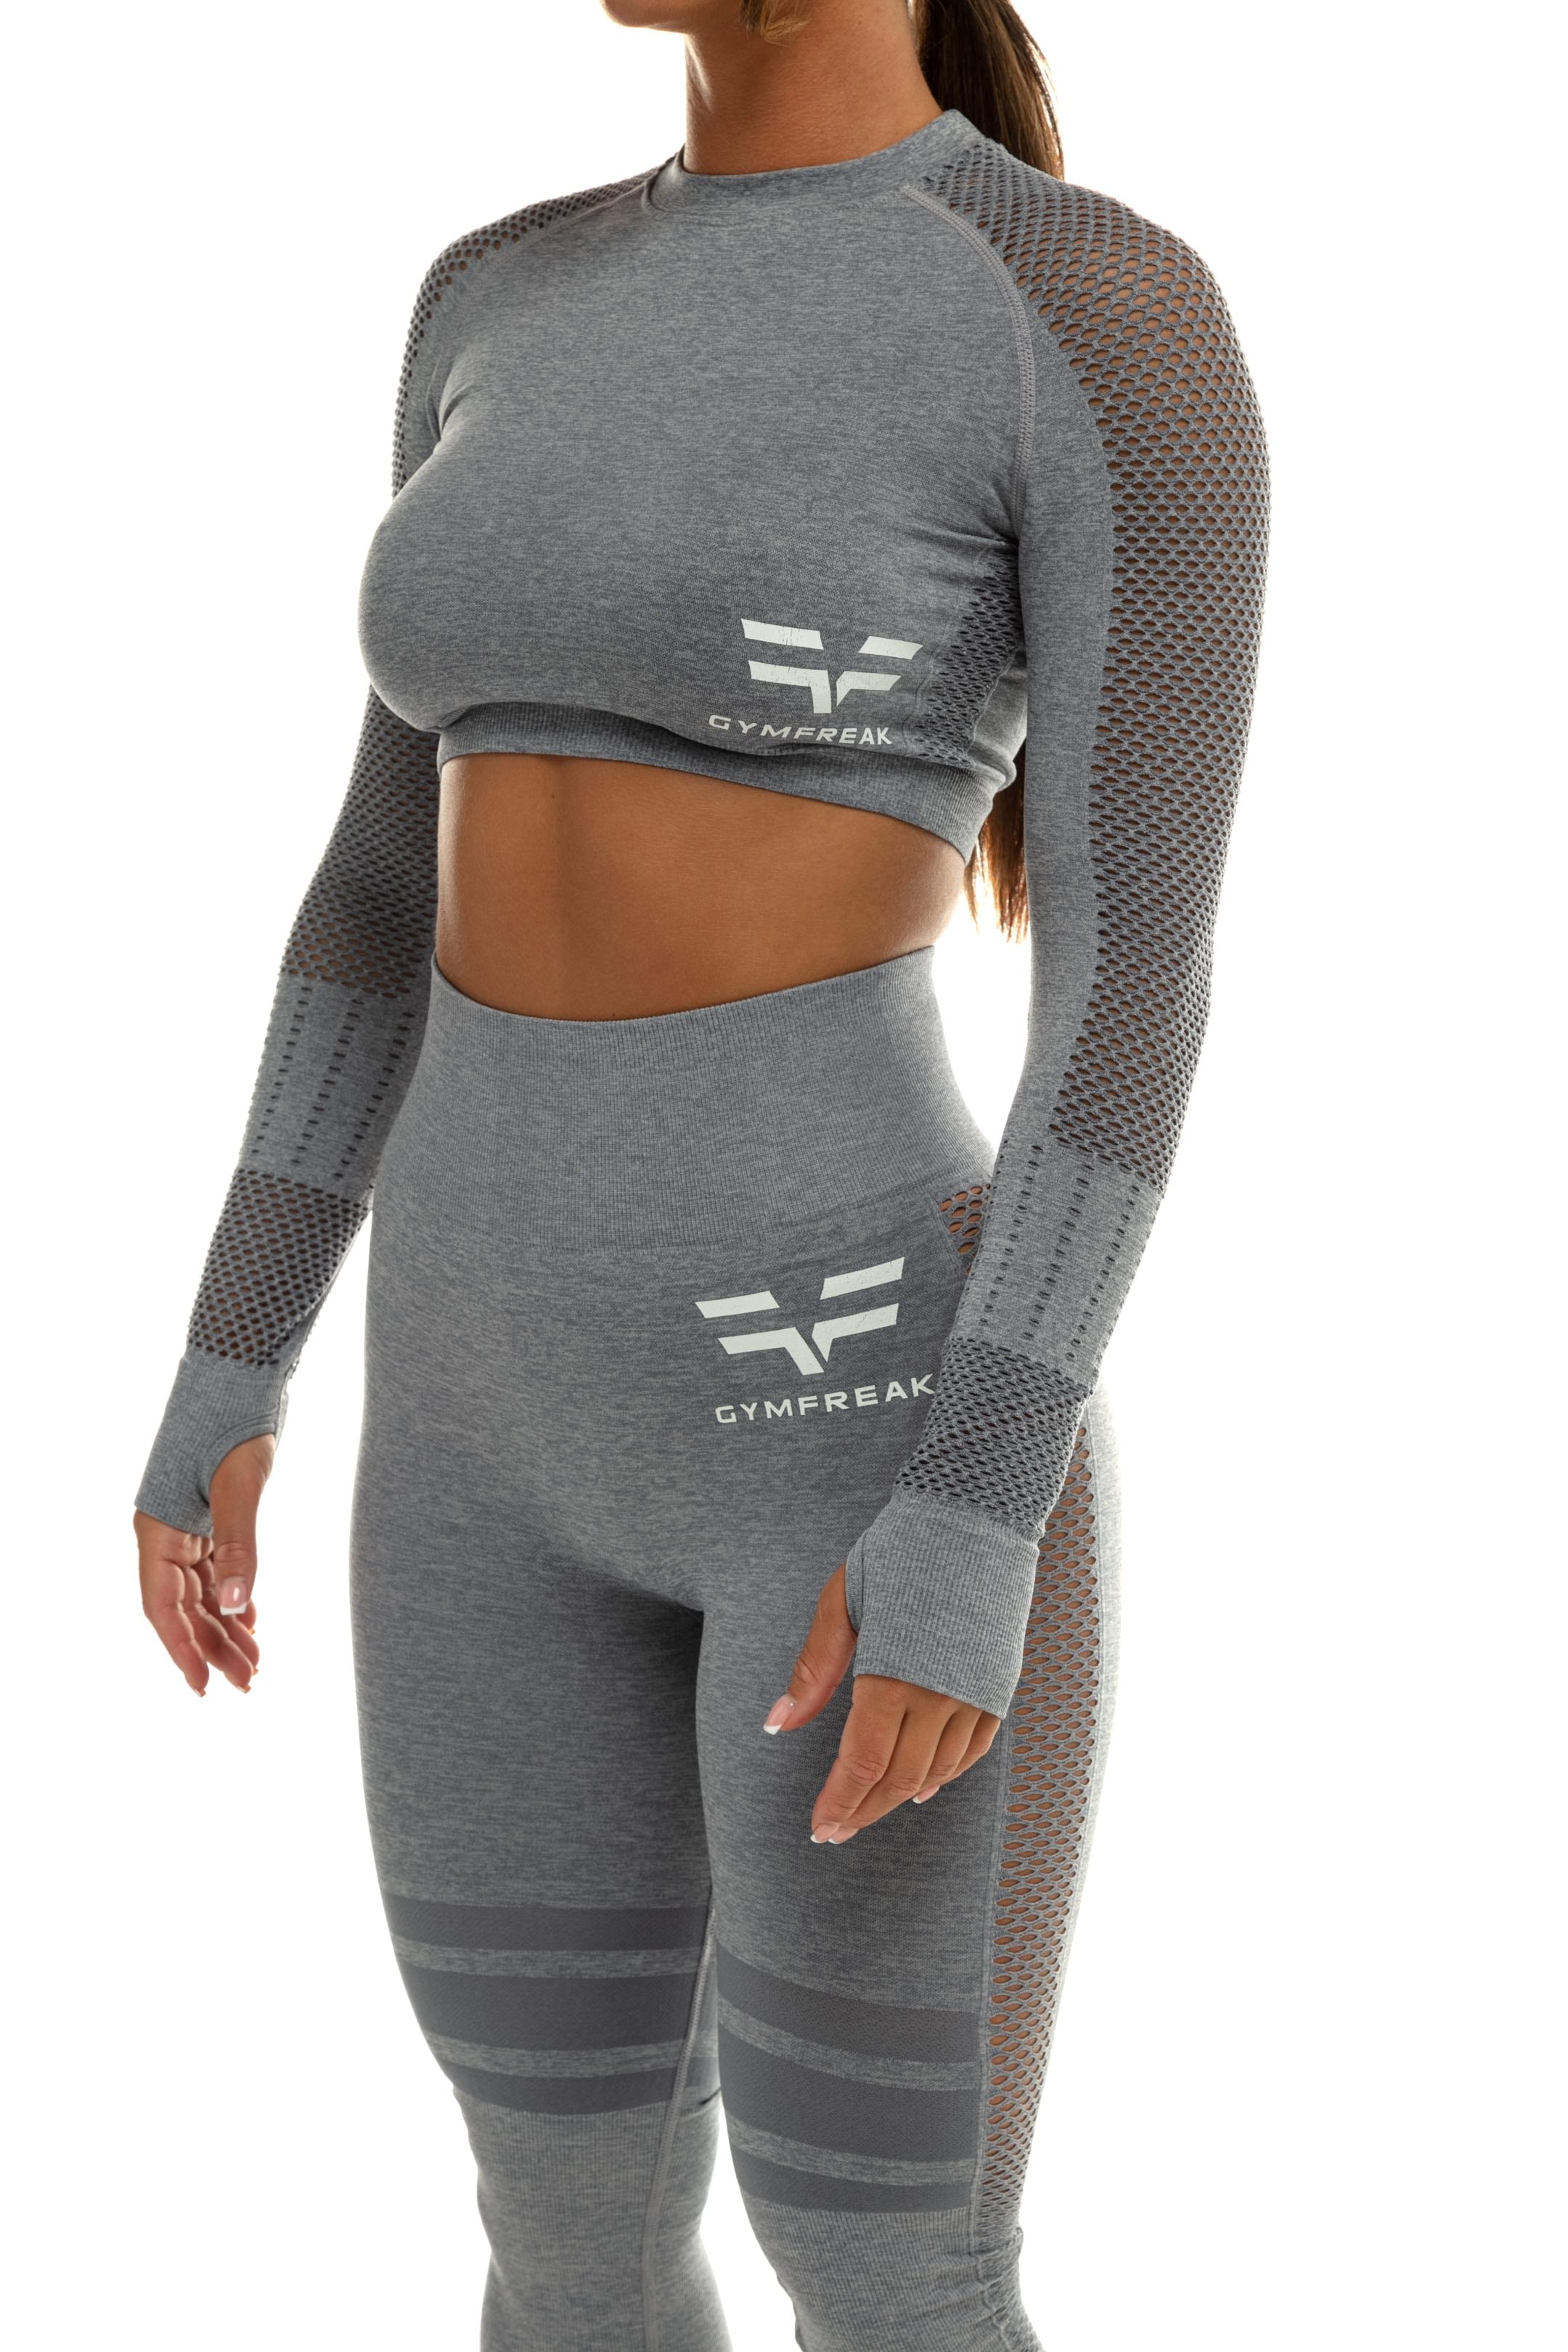 GymFreak Womens Yoga Set - Grey